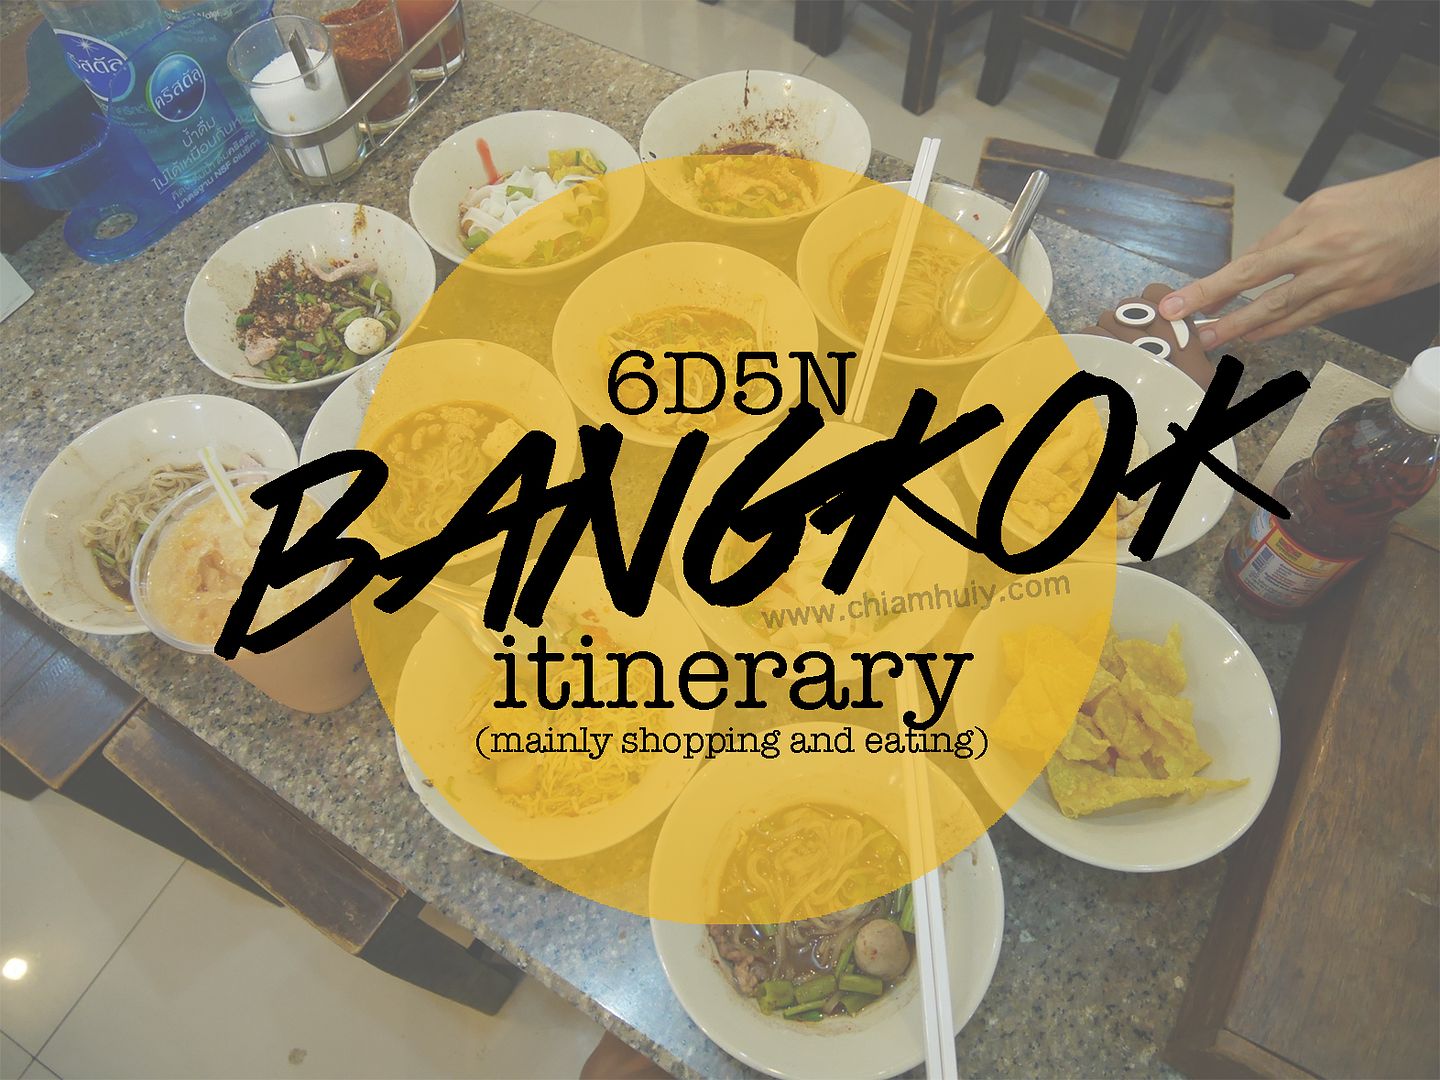  photo 6D5N bangkok itinerary.jpg